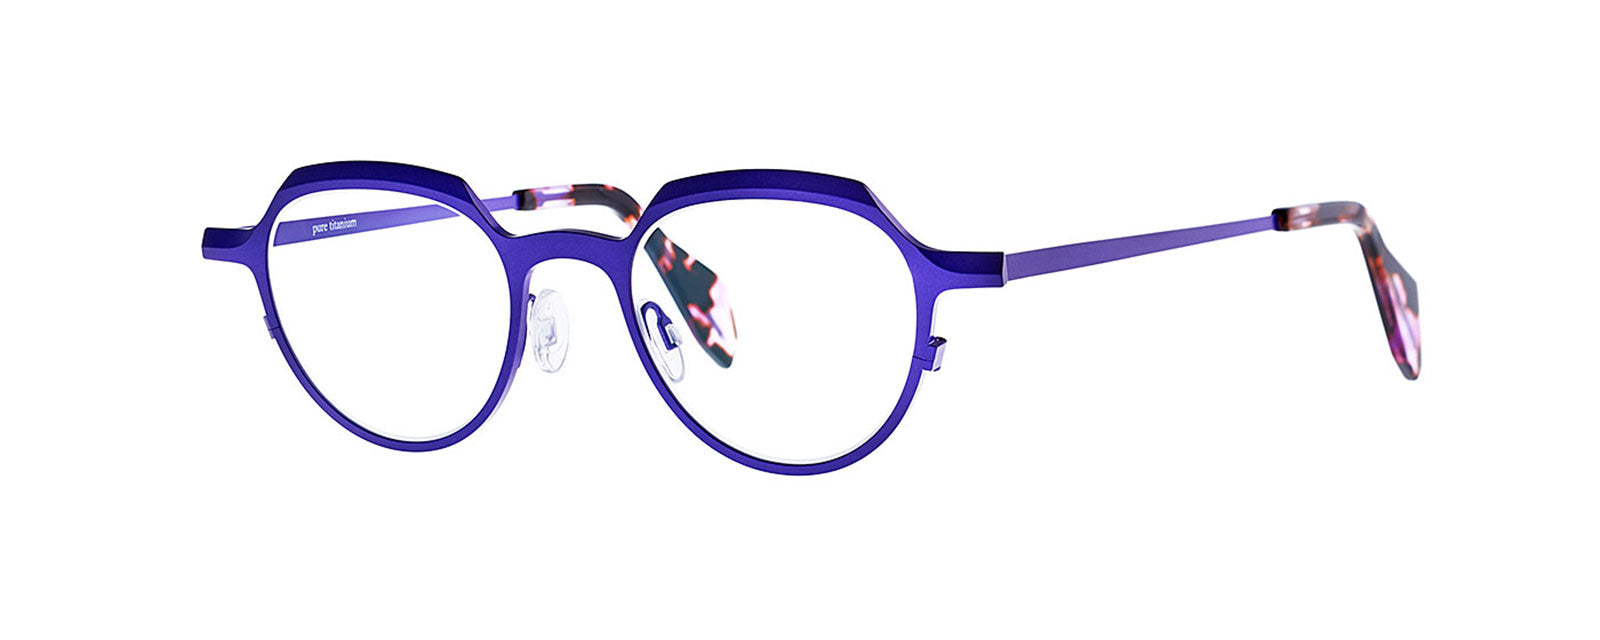 Obus 304 Fluo Purple by Theo Eyewear